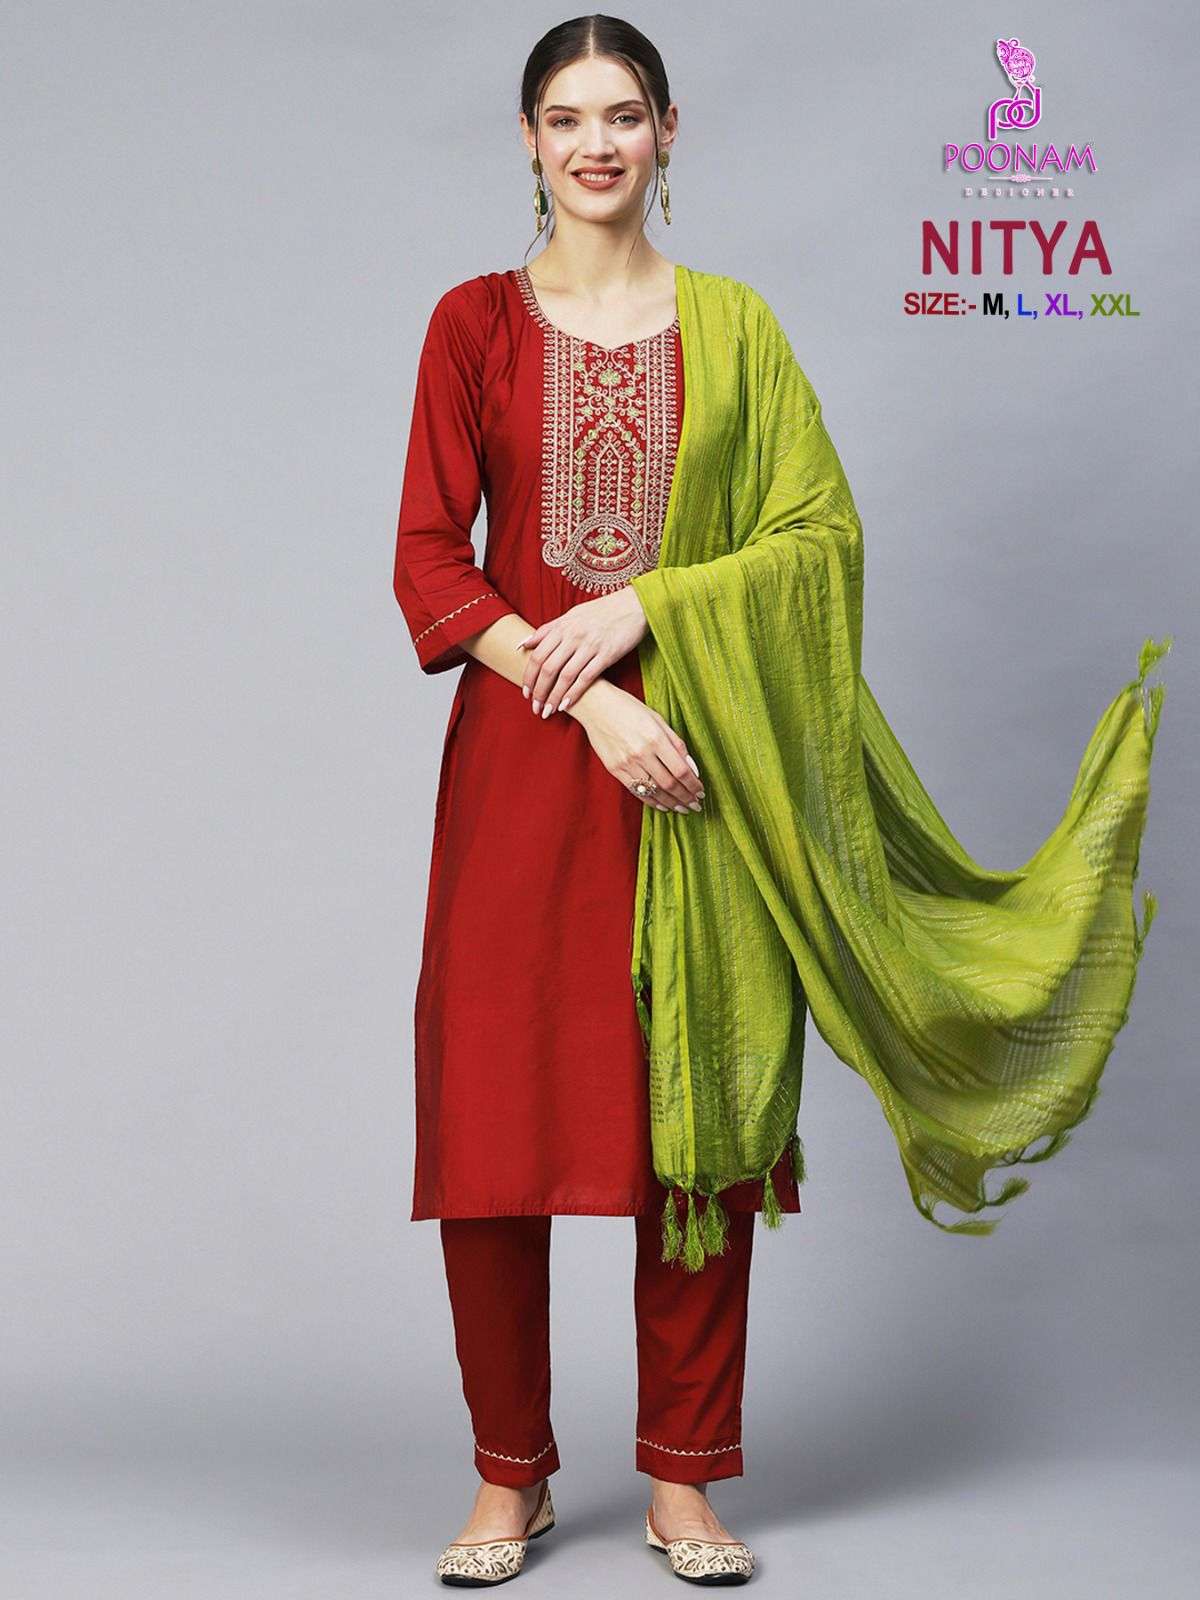 poonam designer nitya 1001-1004 series cotton designer kurtis catalogue online wholesale market surat